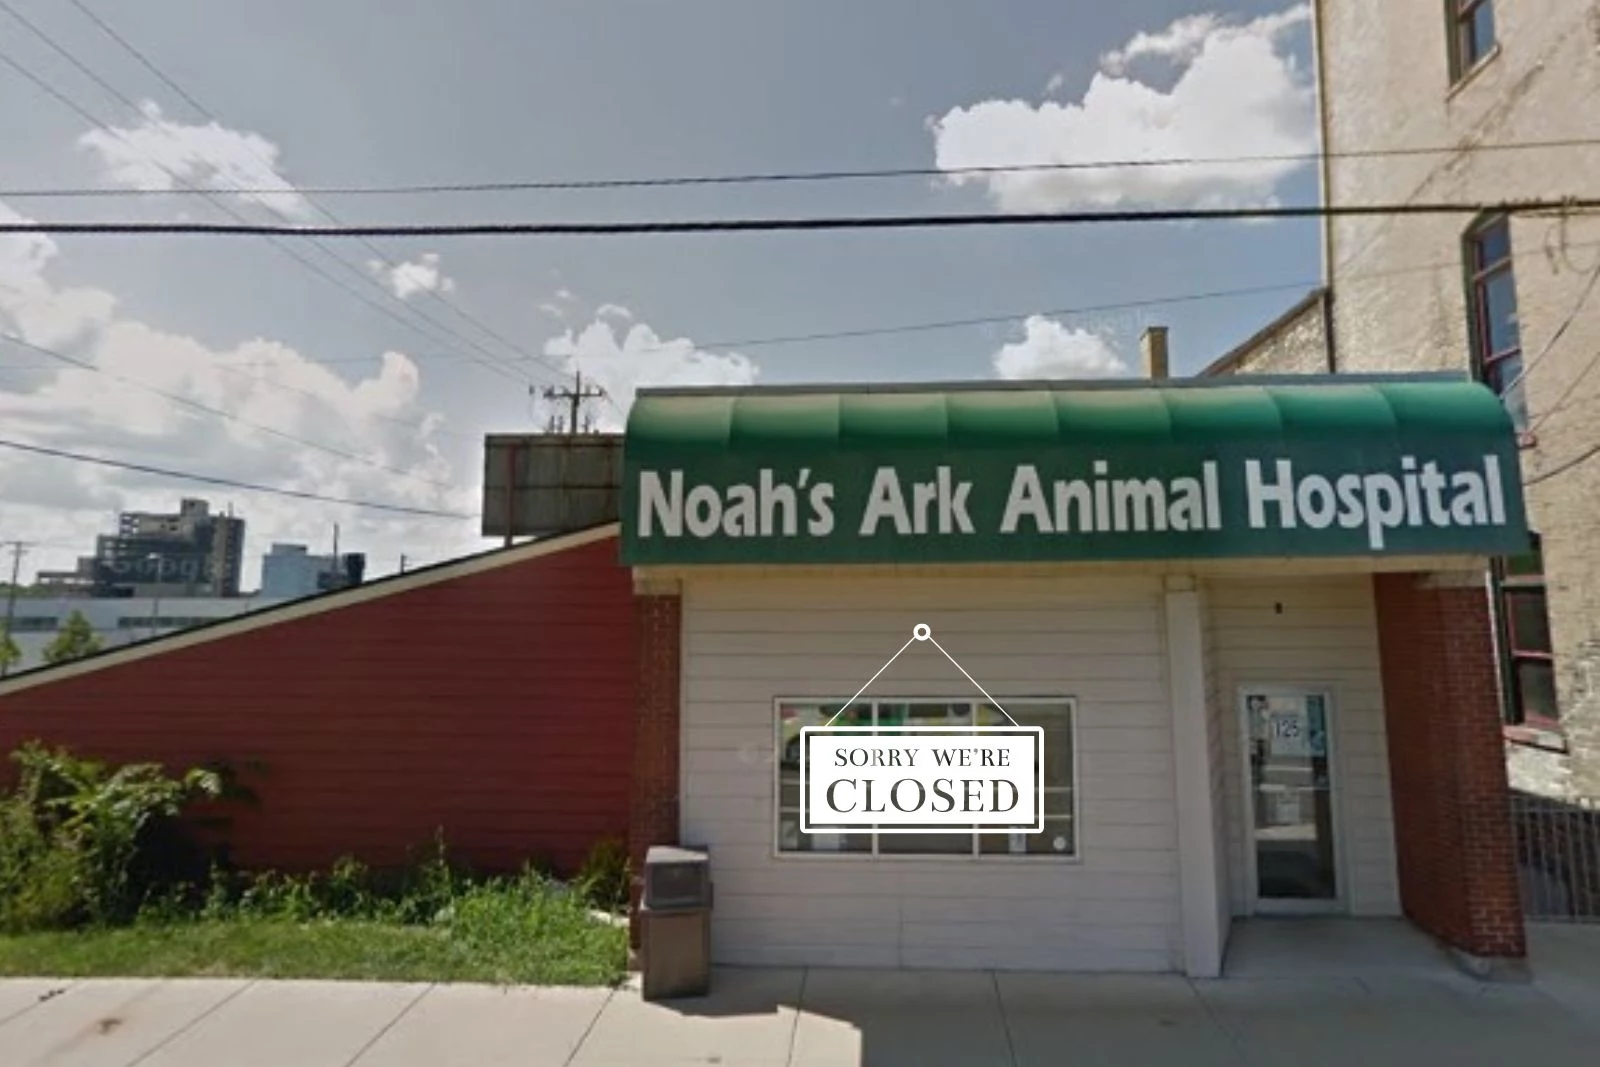 Noah's Ark Animal Hospital Suddenly Closes in Rockford